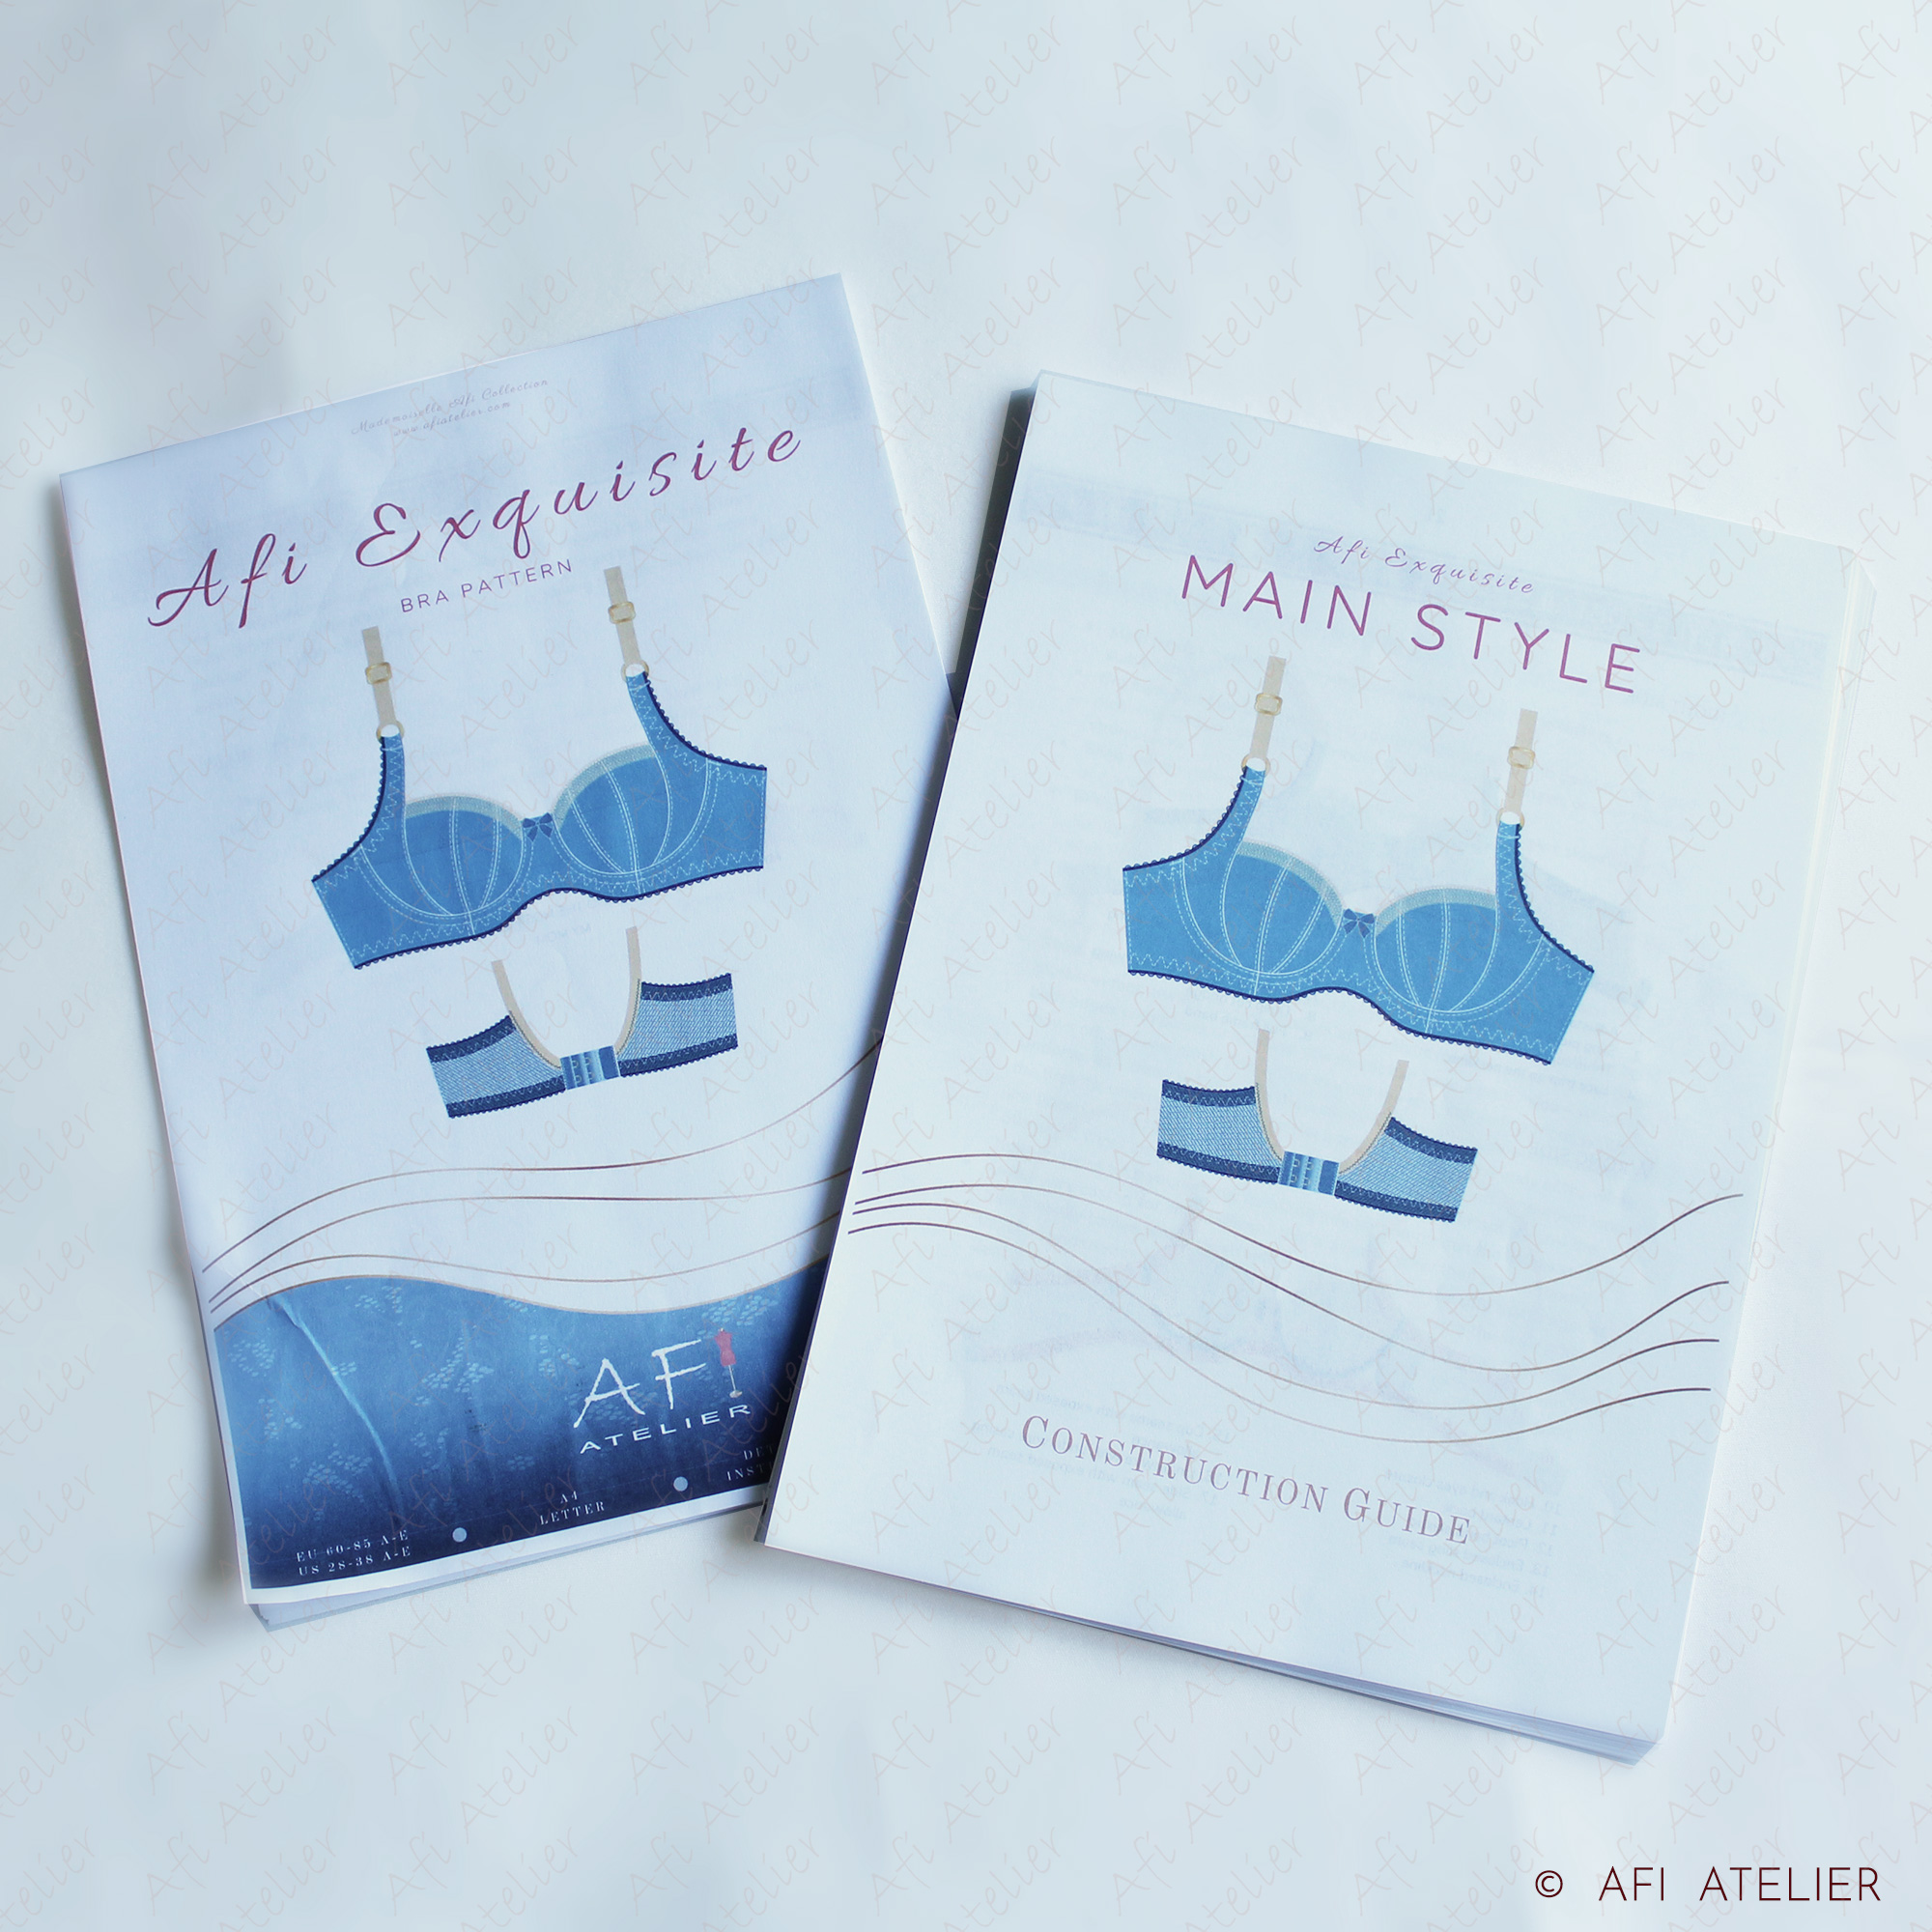 Afi Exquisite Bra - Pattern covers